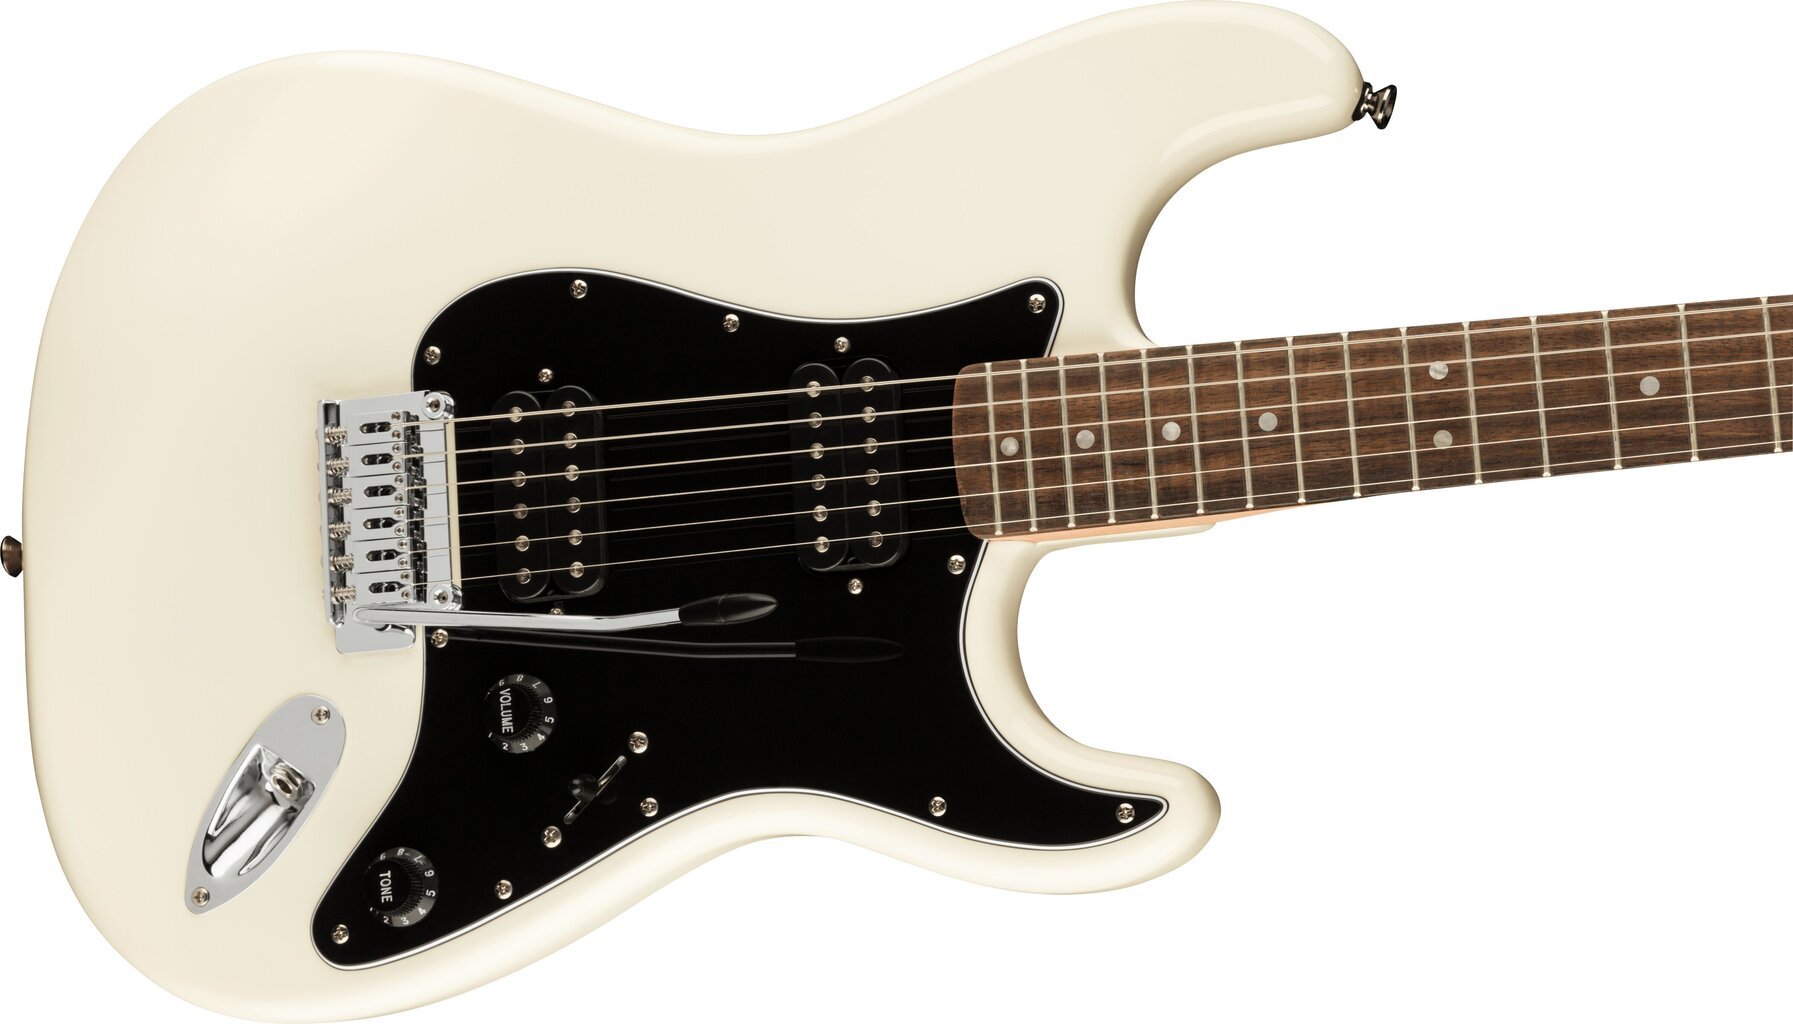 Elektrinė gitara Fender Squier Affinity HH Stratocaster kaina ir informacija | Gitaros | pigu.lt